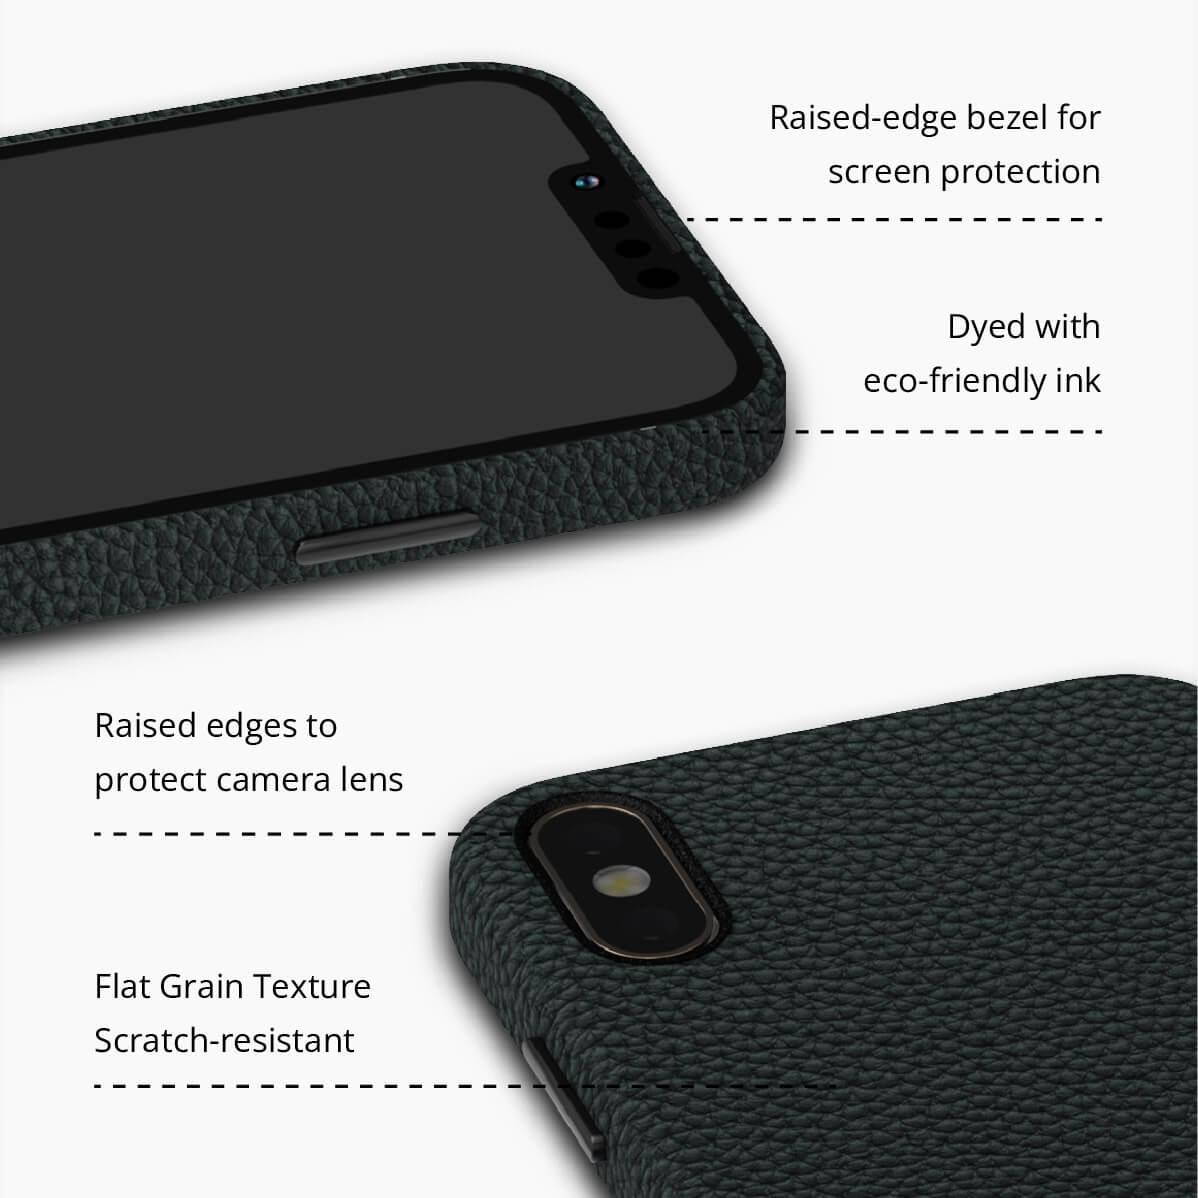 iPhone XS Black Premium Leather Phone Case - CORECOLOUR